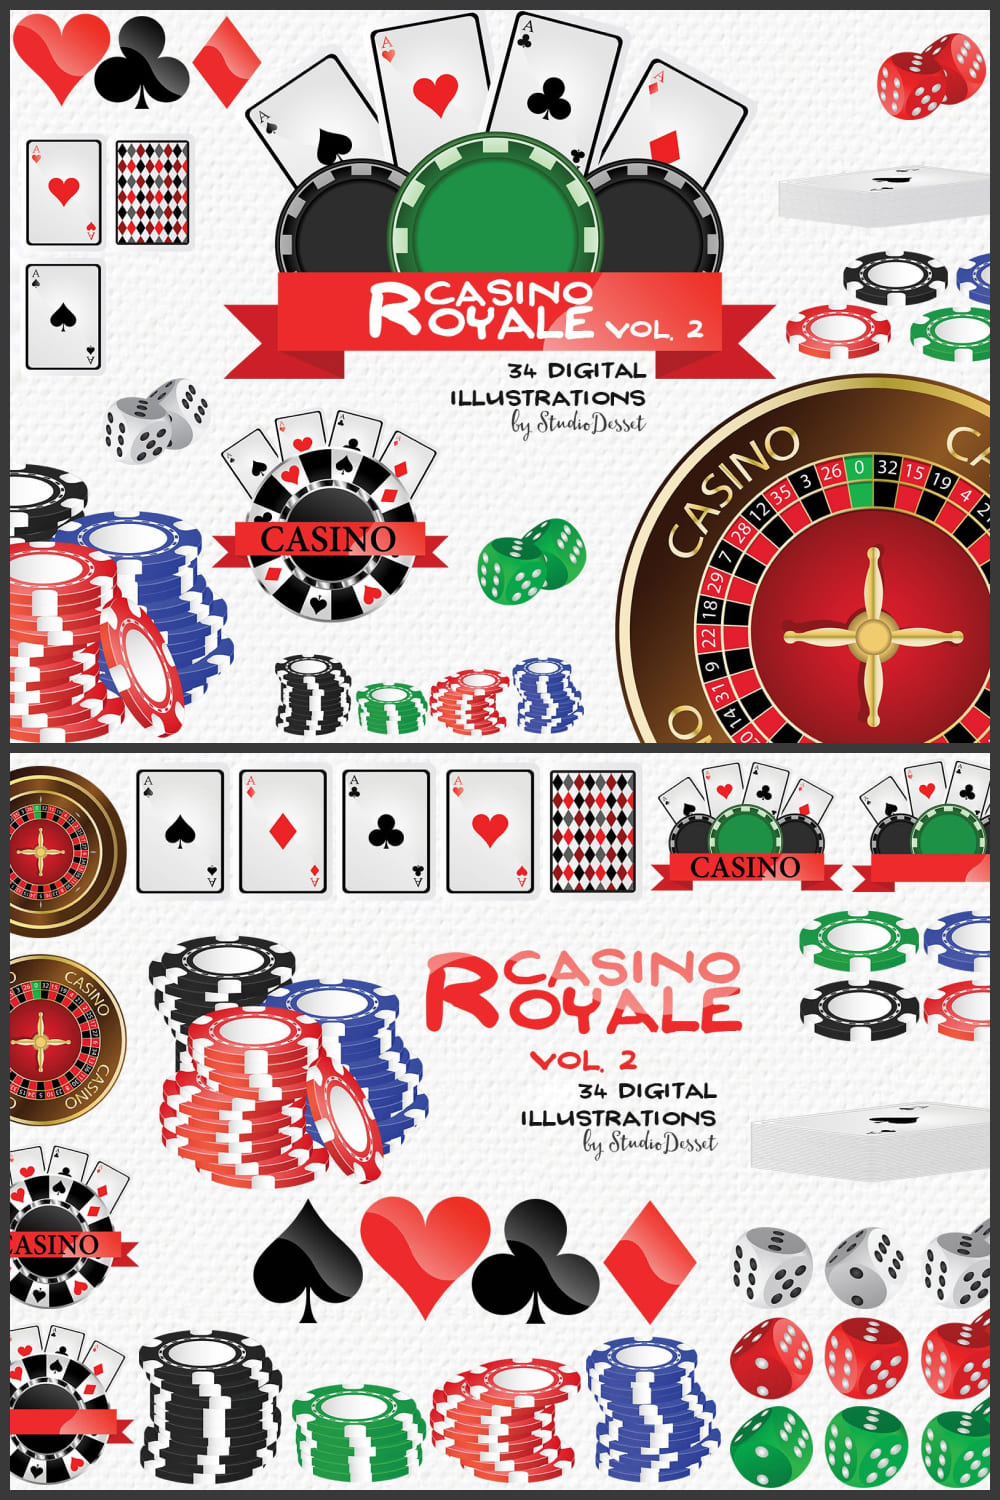 Casino royale poker vegas cliparts - Pinterest image preview.